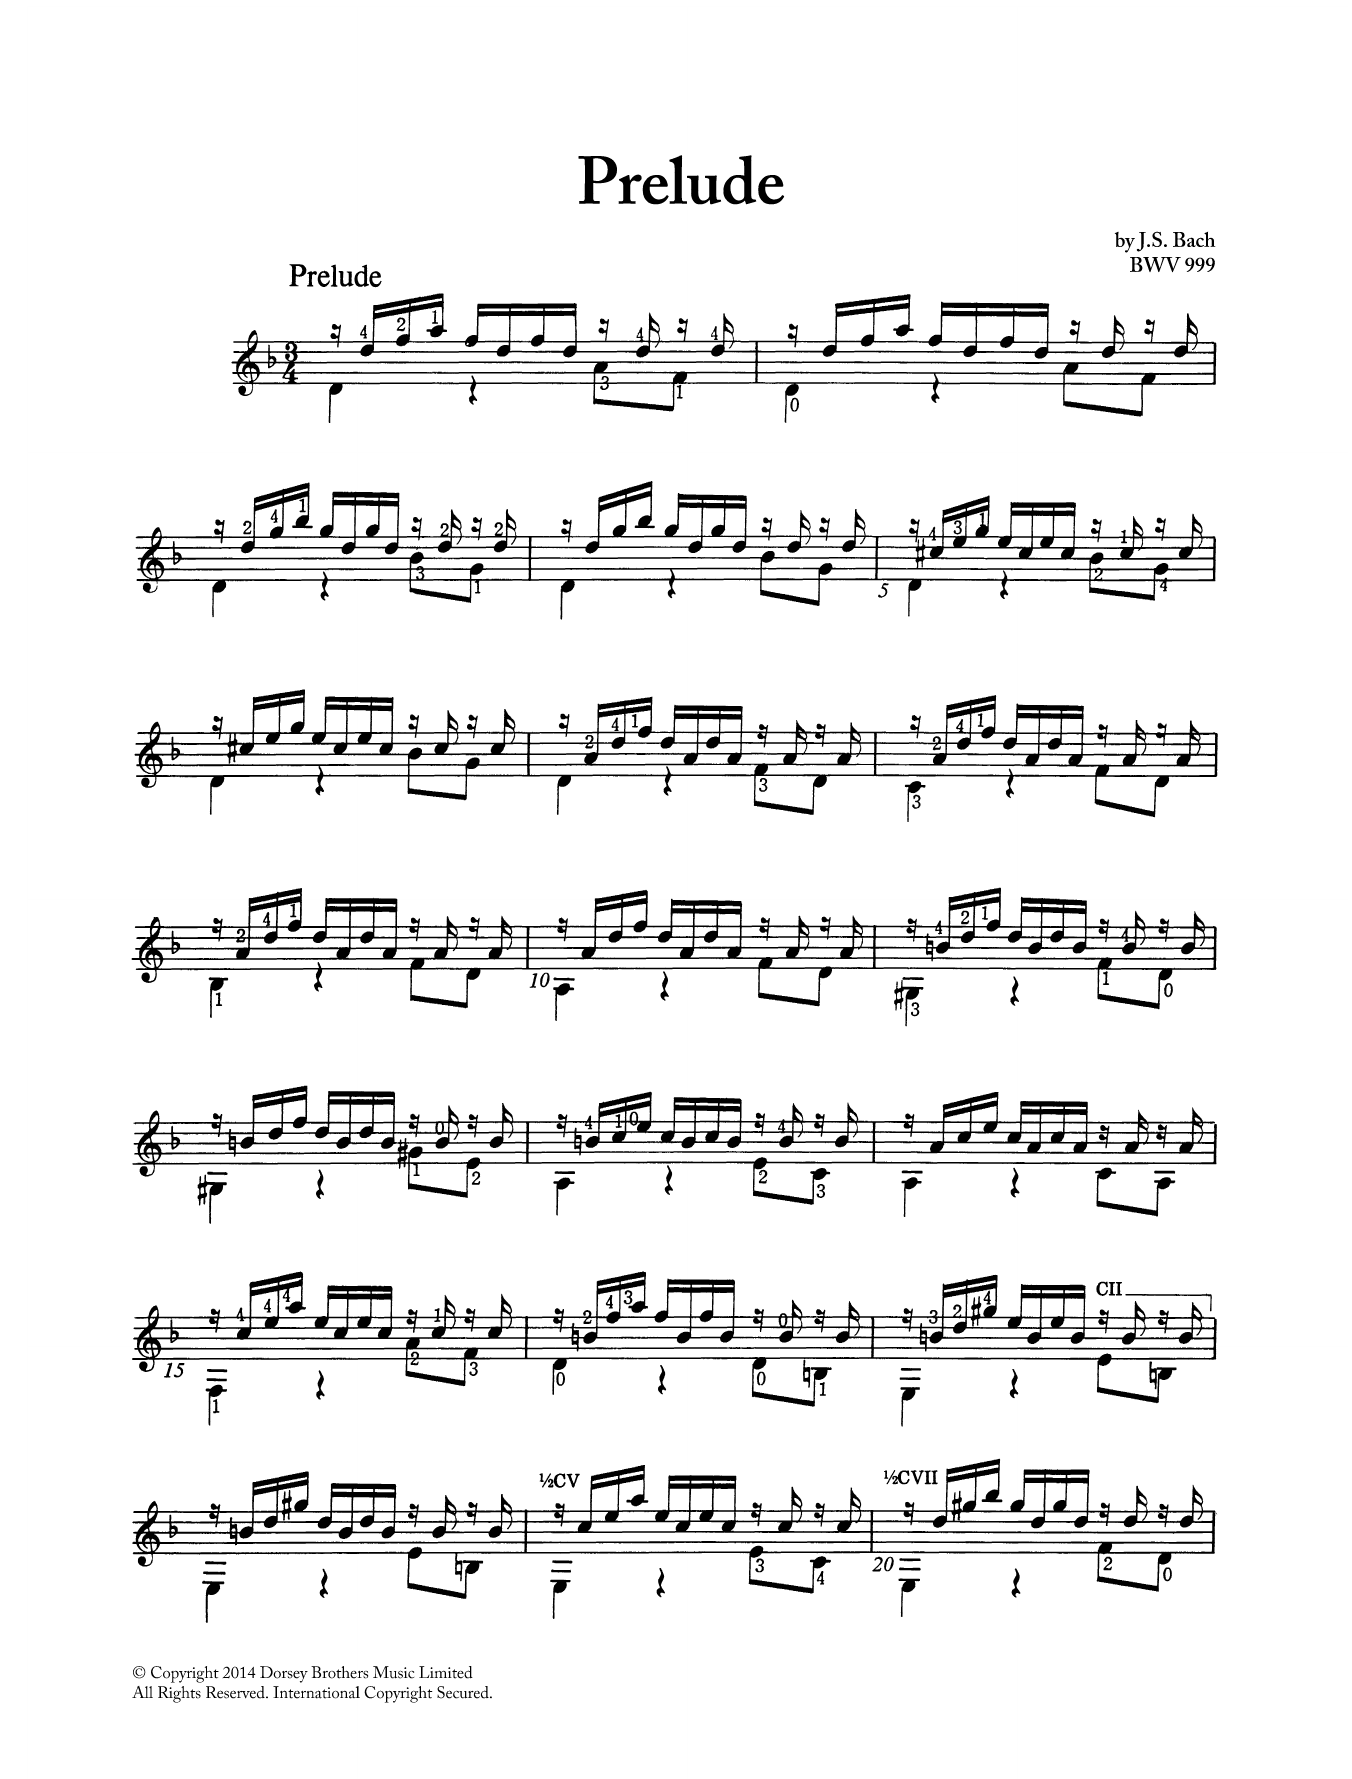 Johann Sebastian Bach Prelude BWV 999 Sheet Music Notes & Chords for Guitar - Download or Print PDF